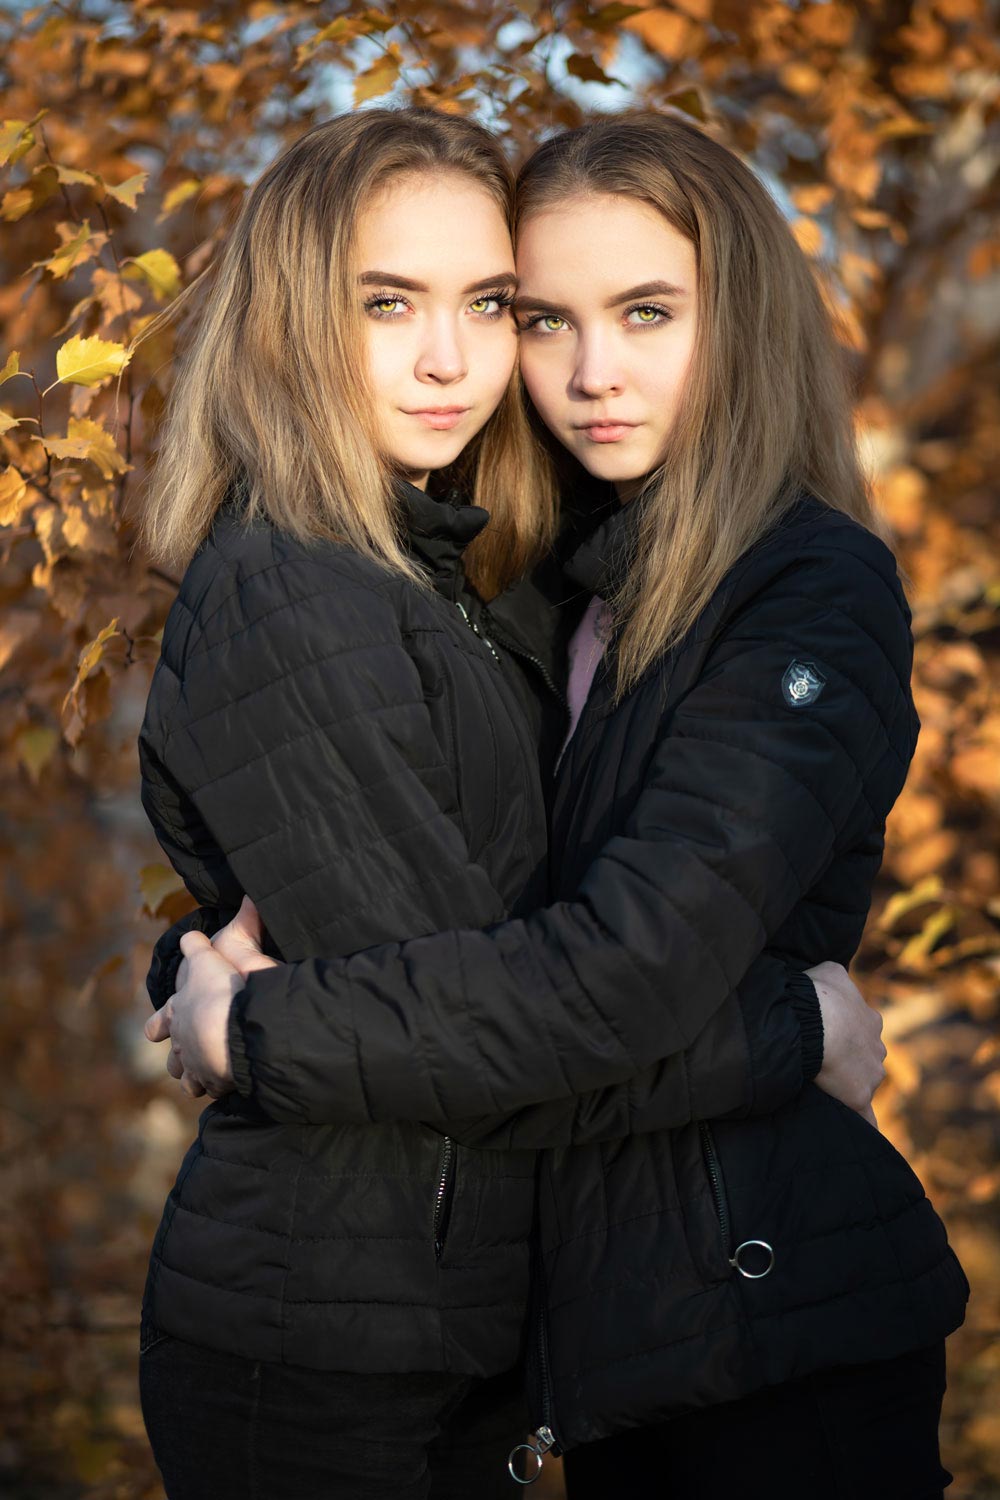 Gorgeous twins